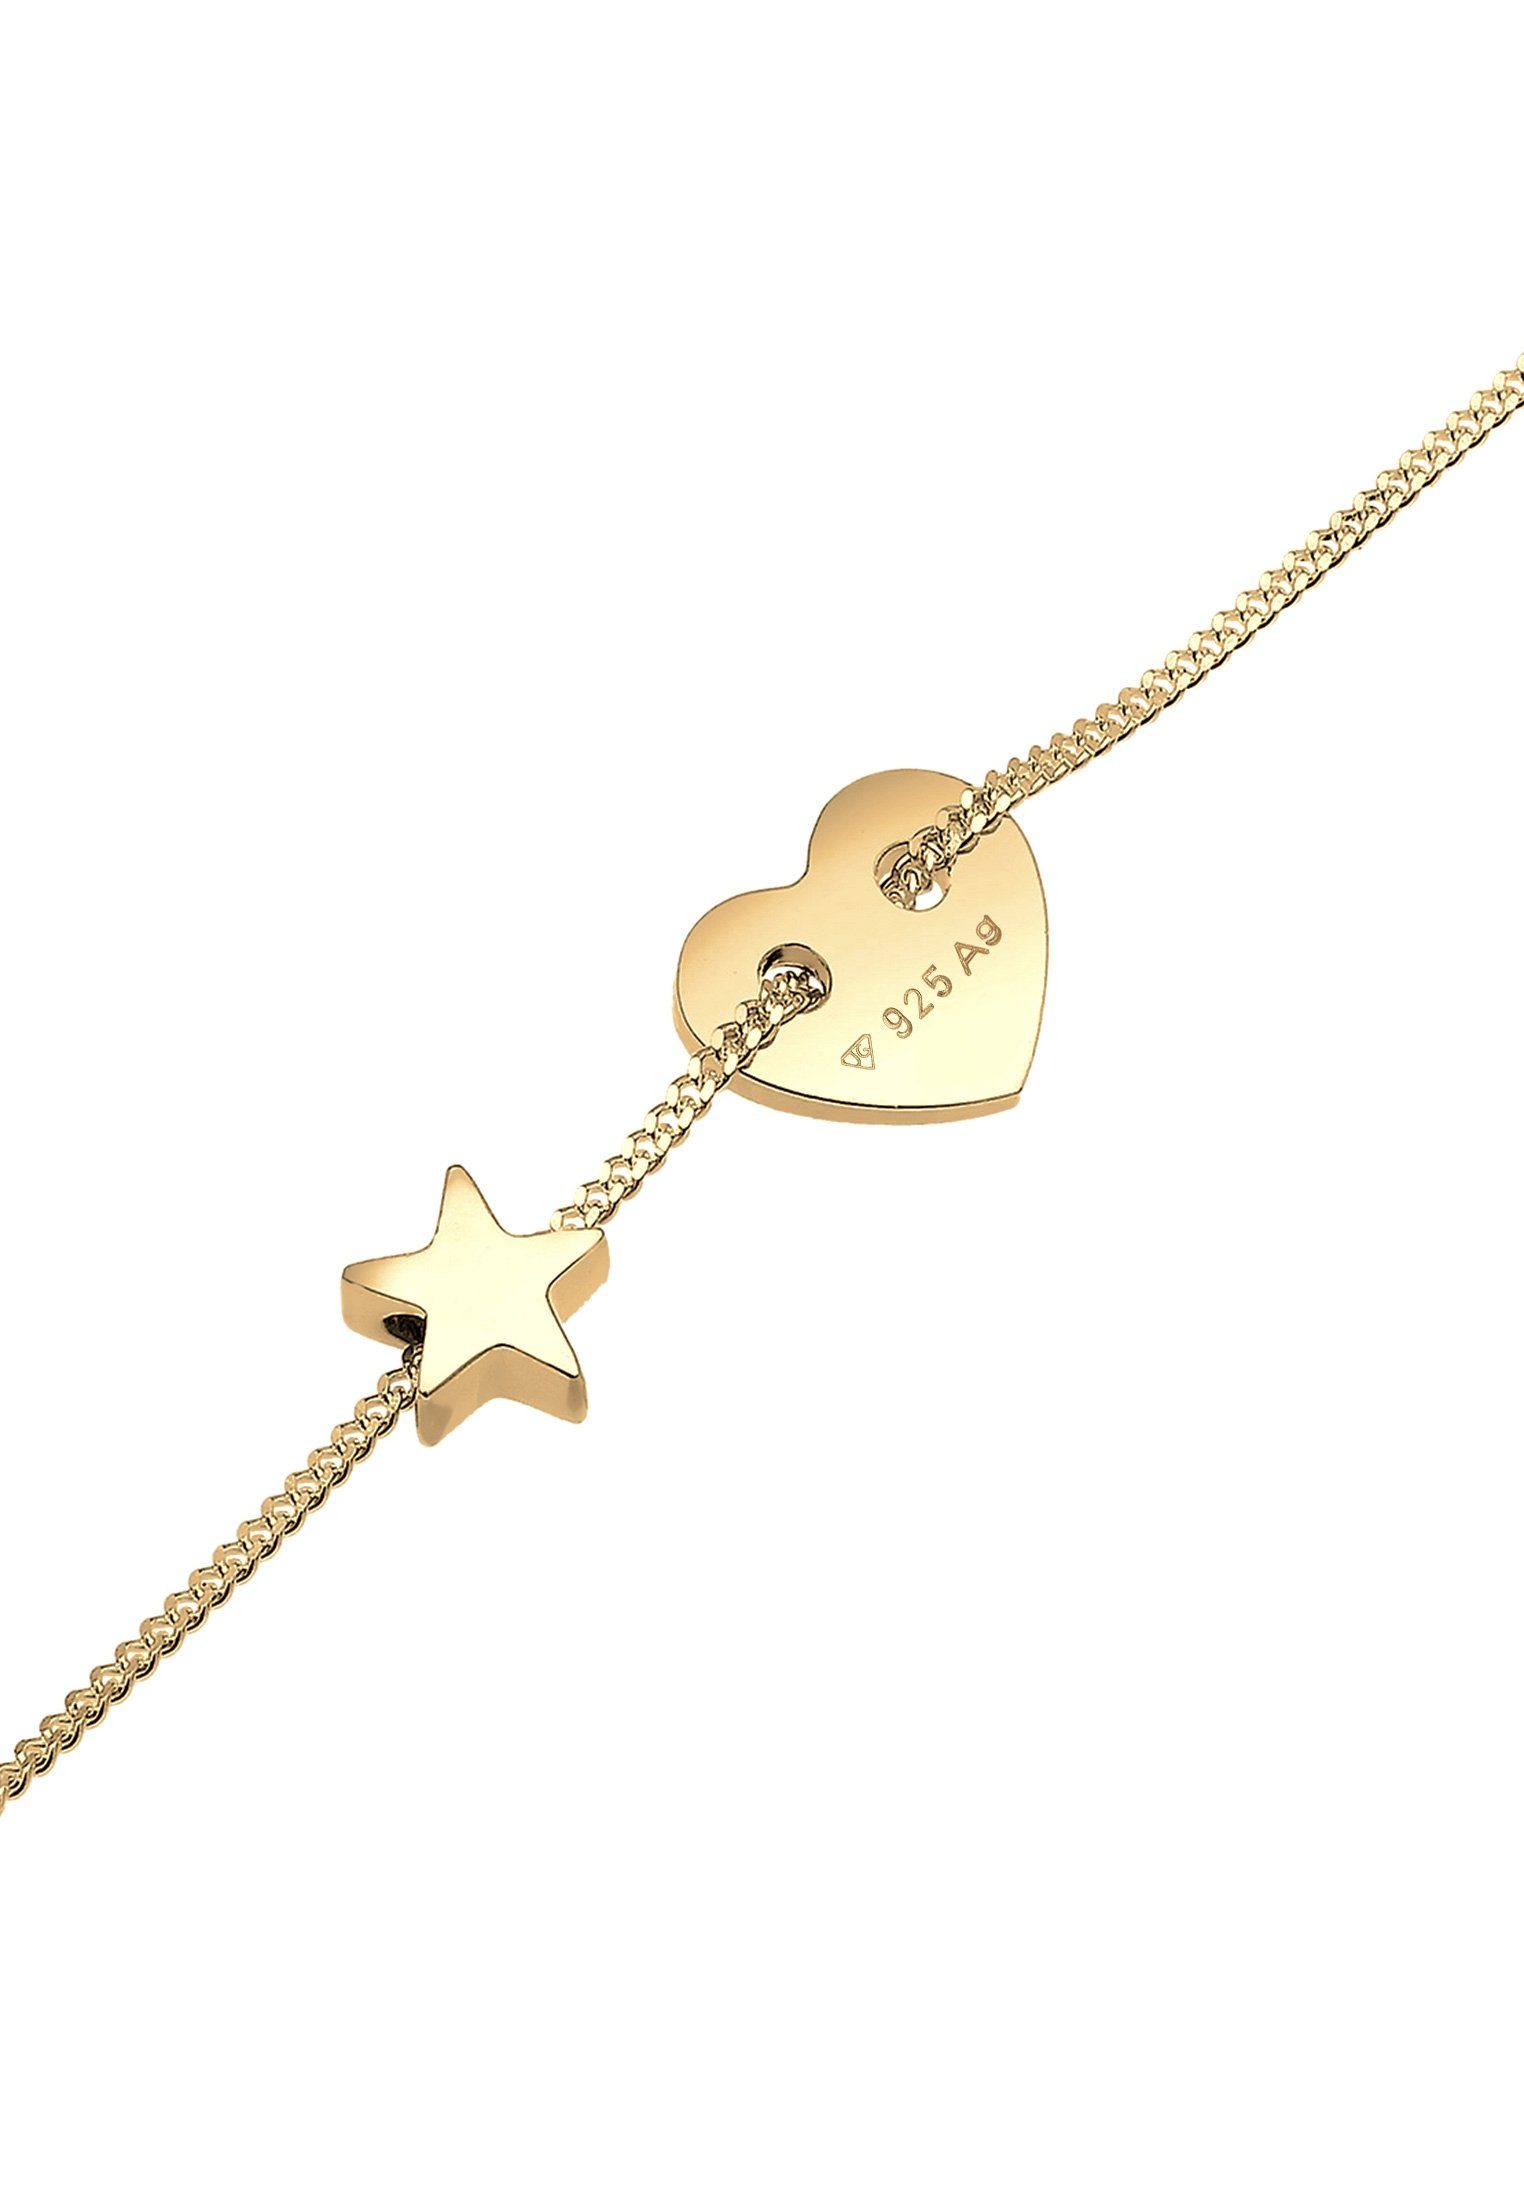 Gold Elli Herz 925 Symbol Herz Filigran Astro Sterne Silber, Armband